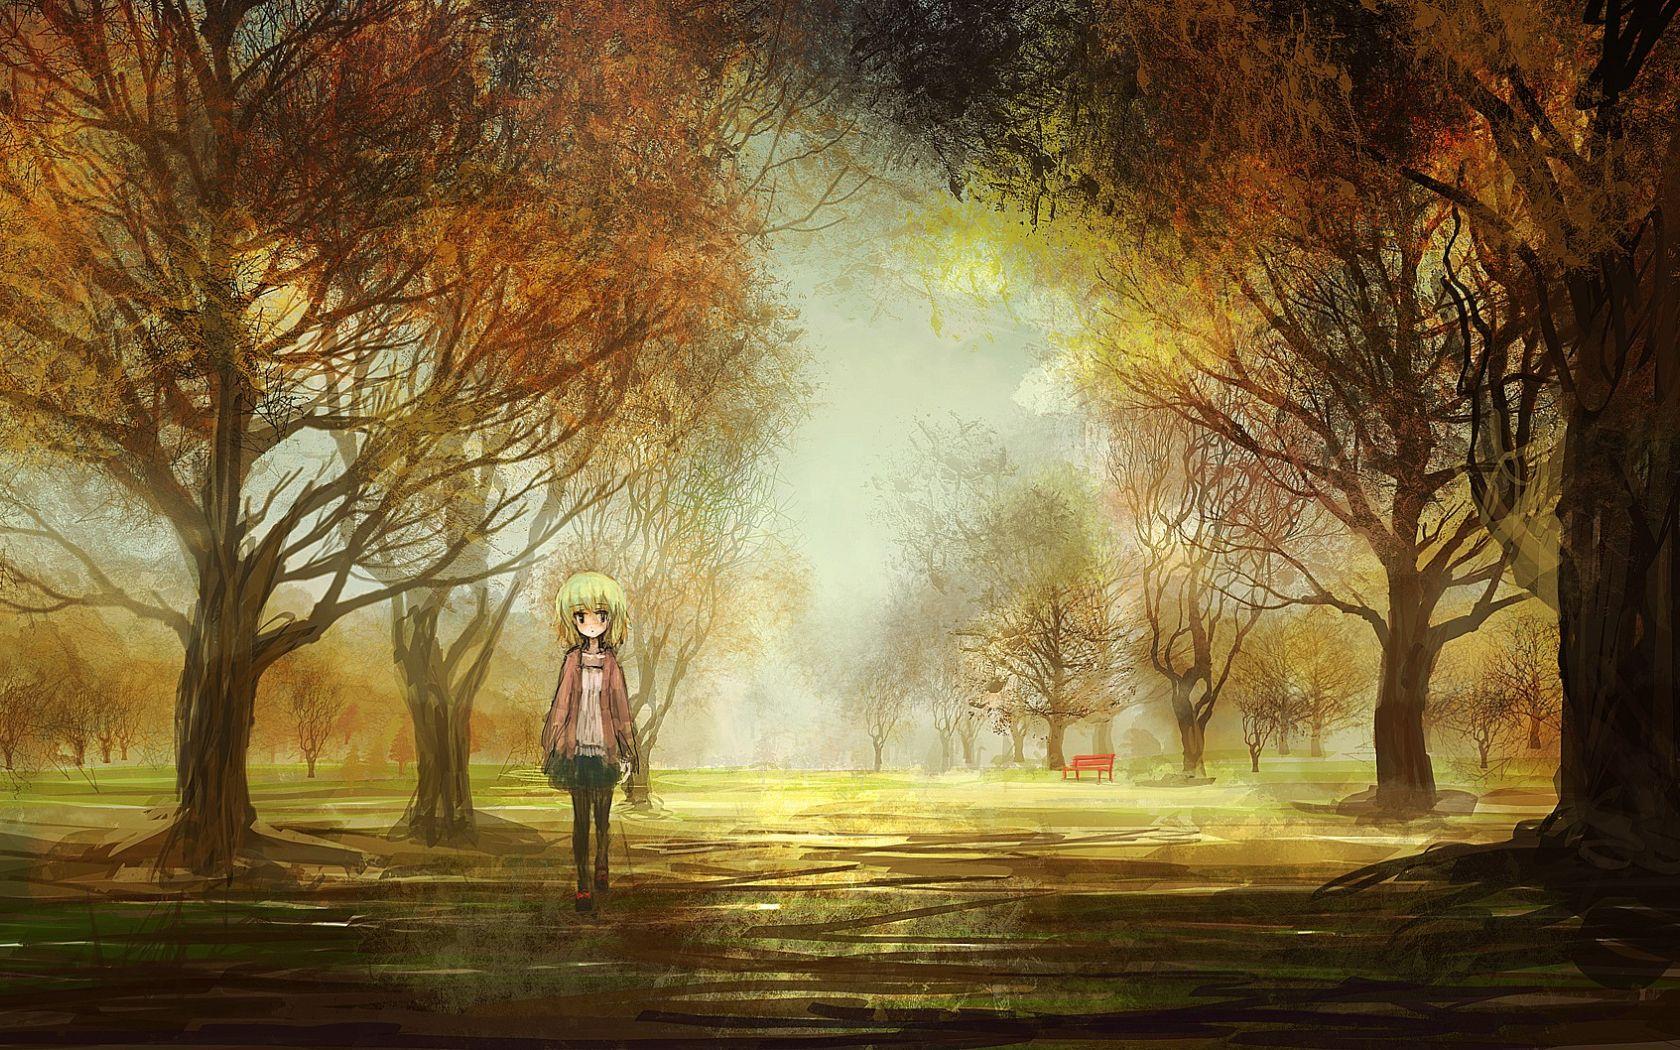 Anime Autumn Desktop Wallpapers - Top Free Anime Autumn Desktop